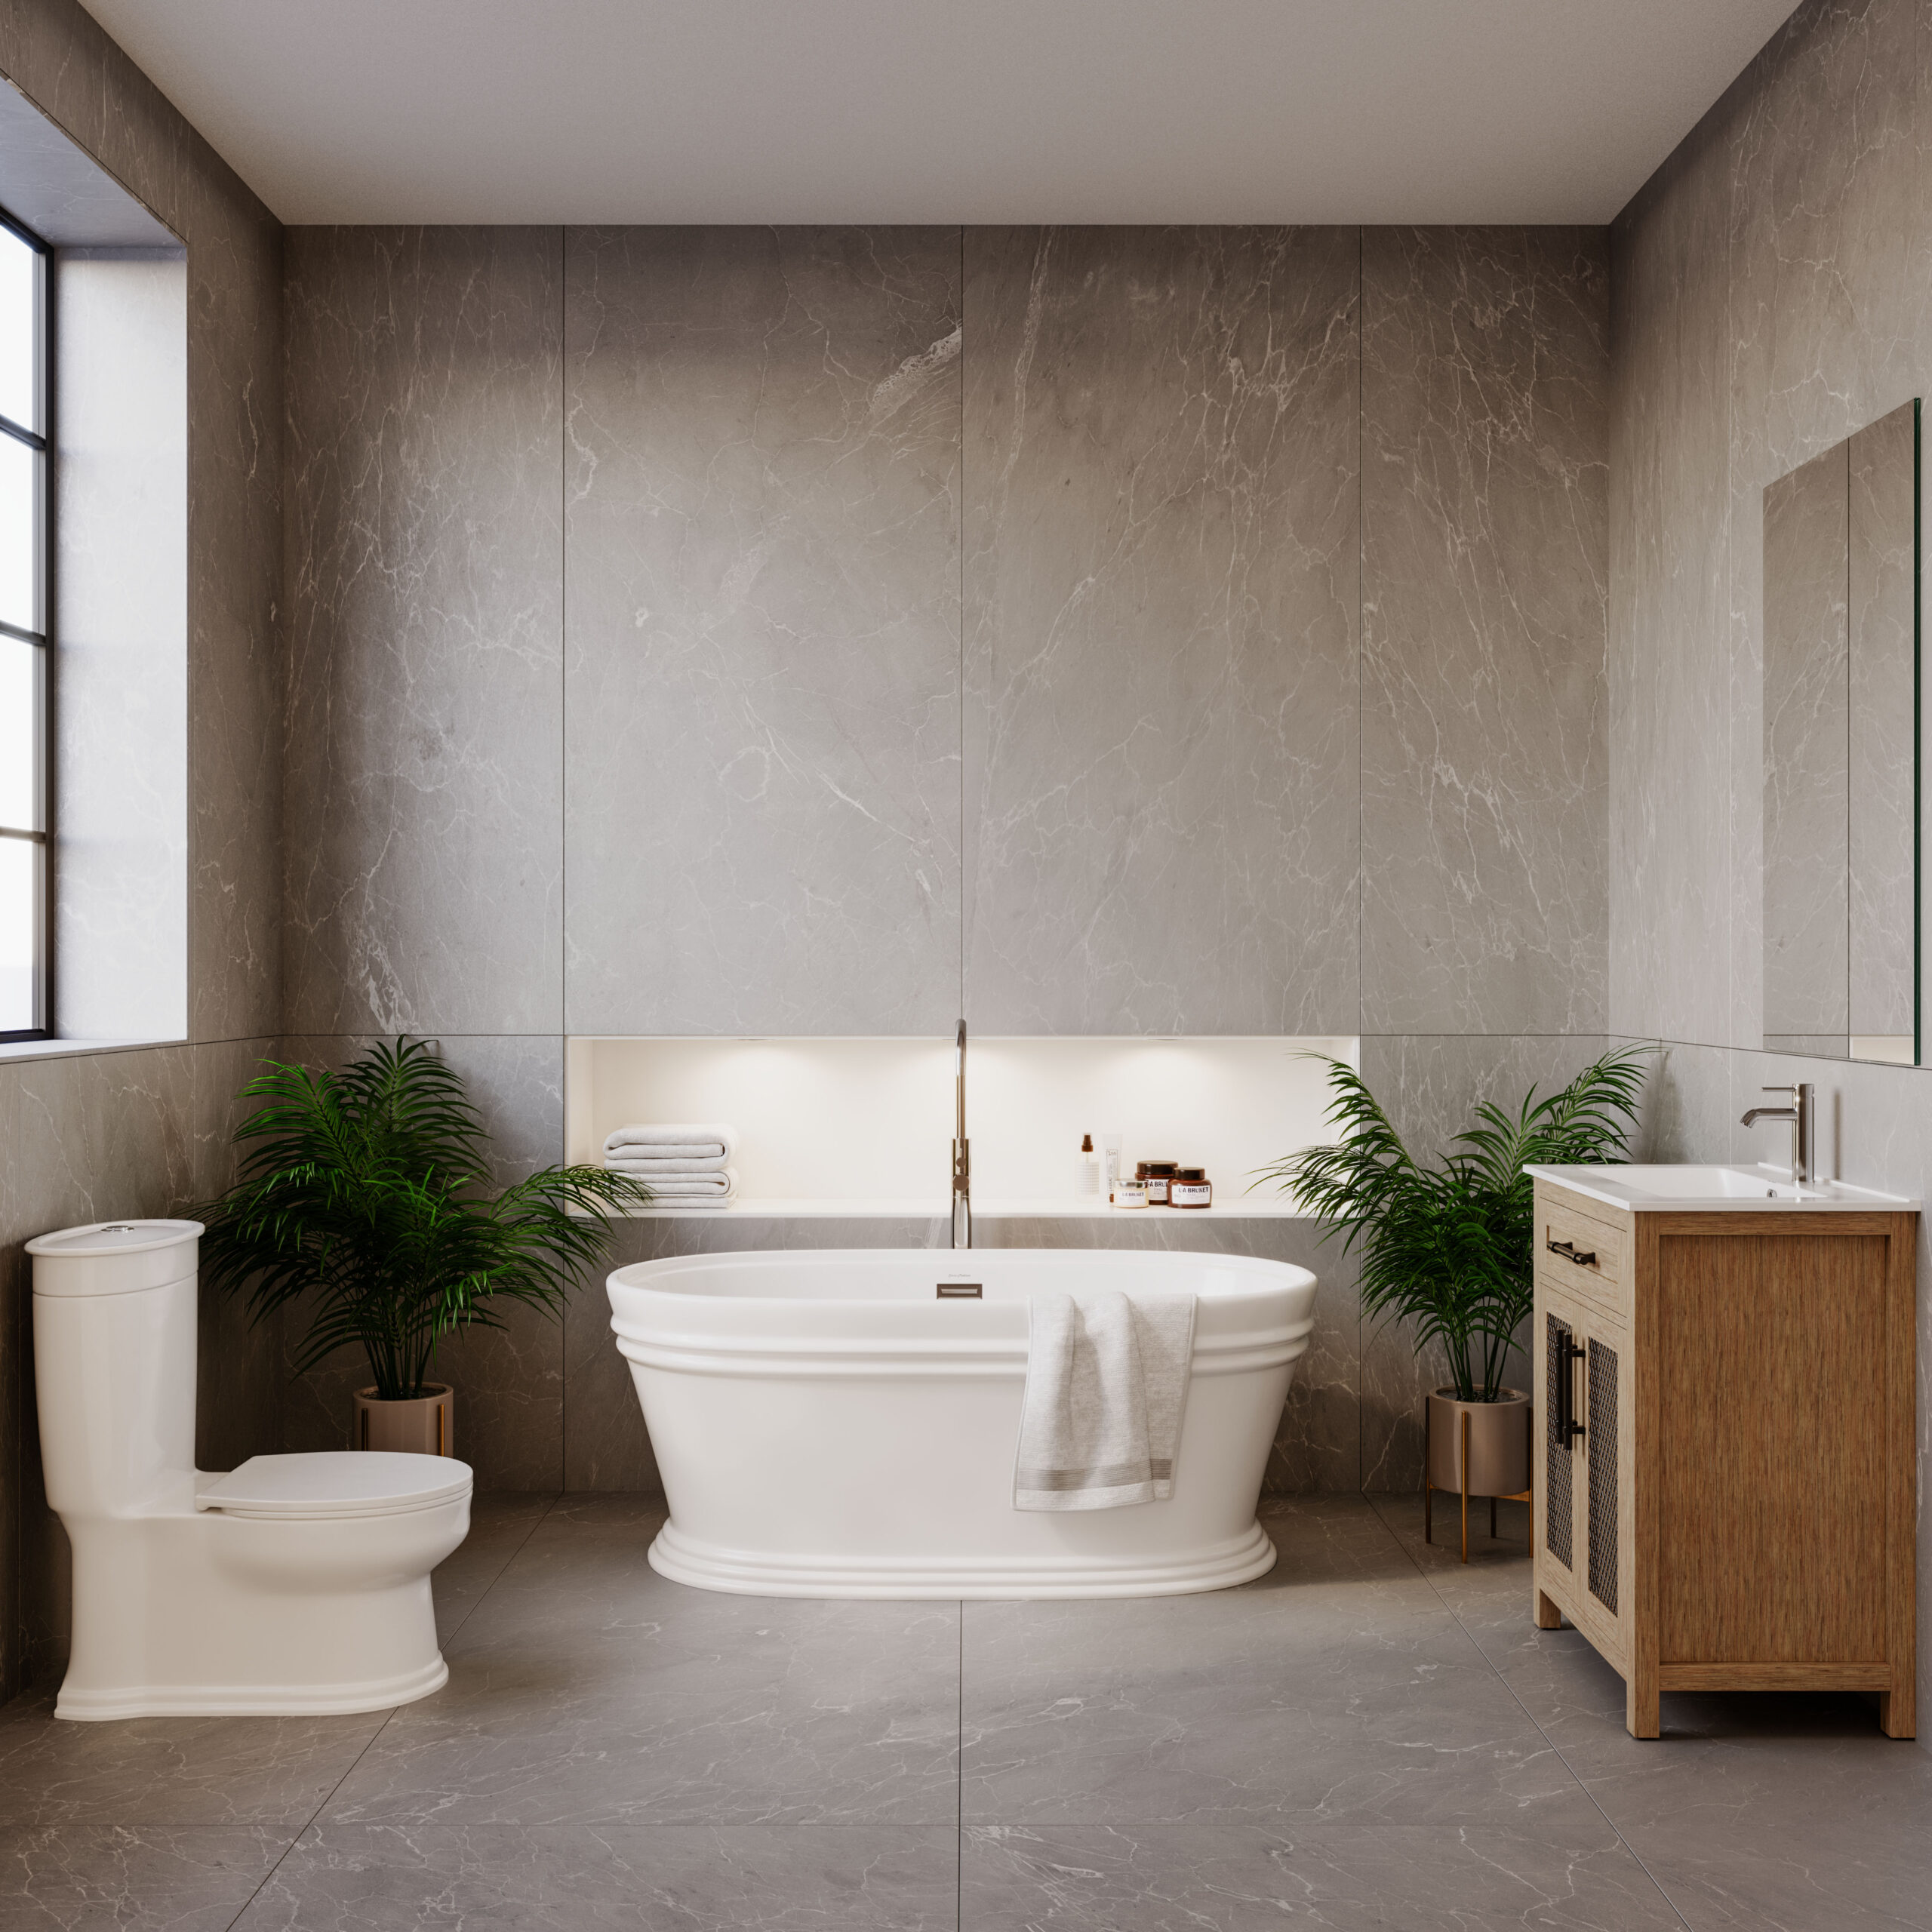 3D rendering visualization cgi bathroom fixtures company